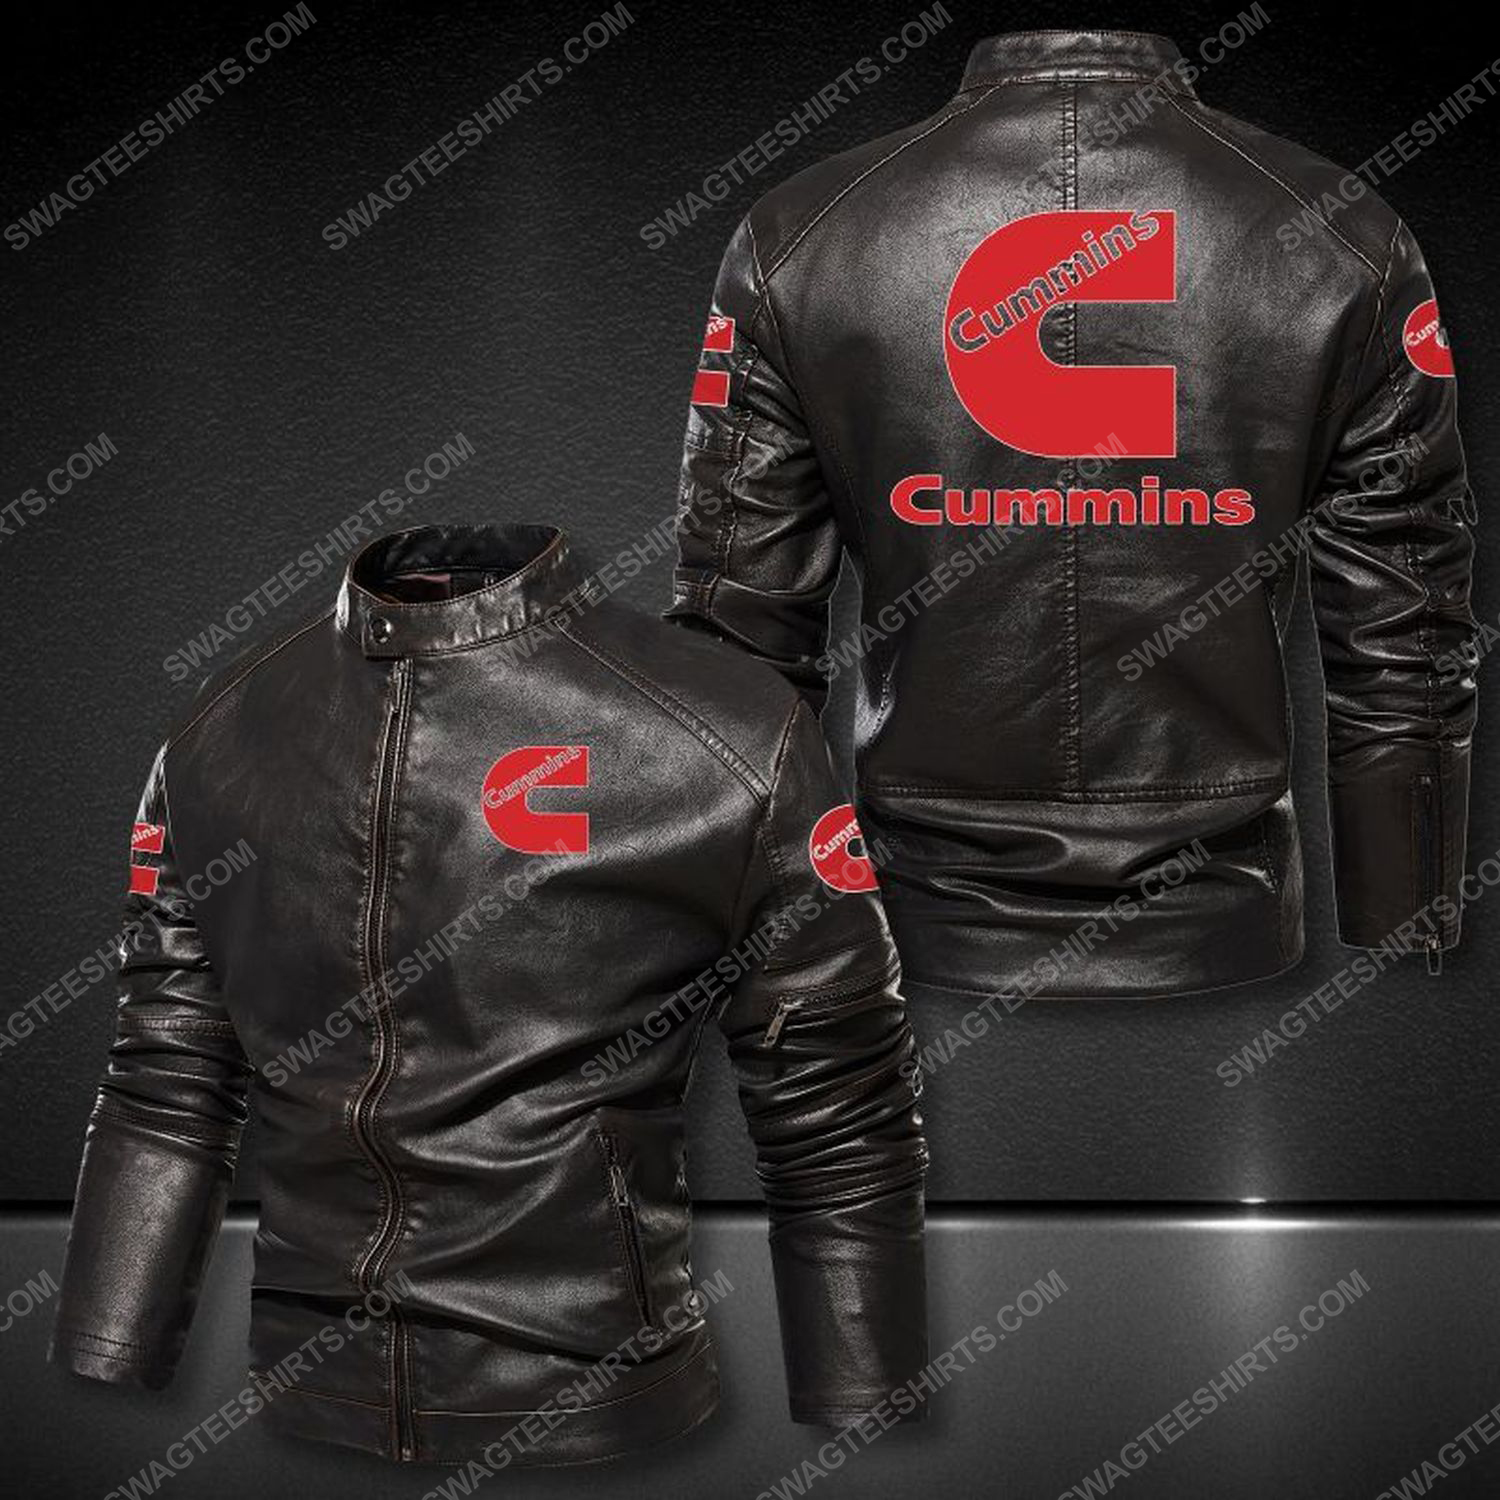 Cummins race engines sport leather jacket 1 - Copy